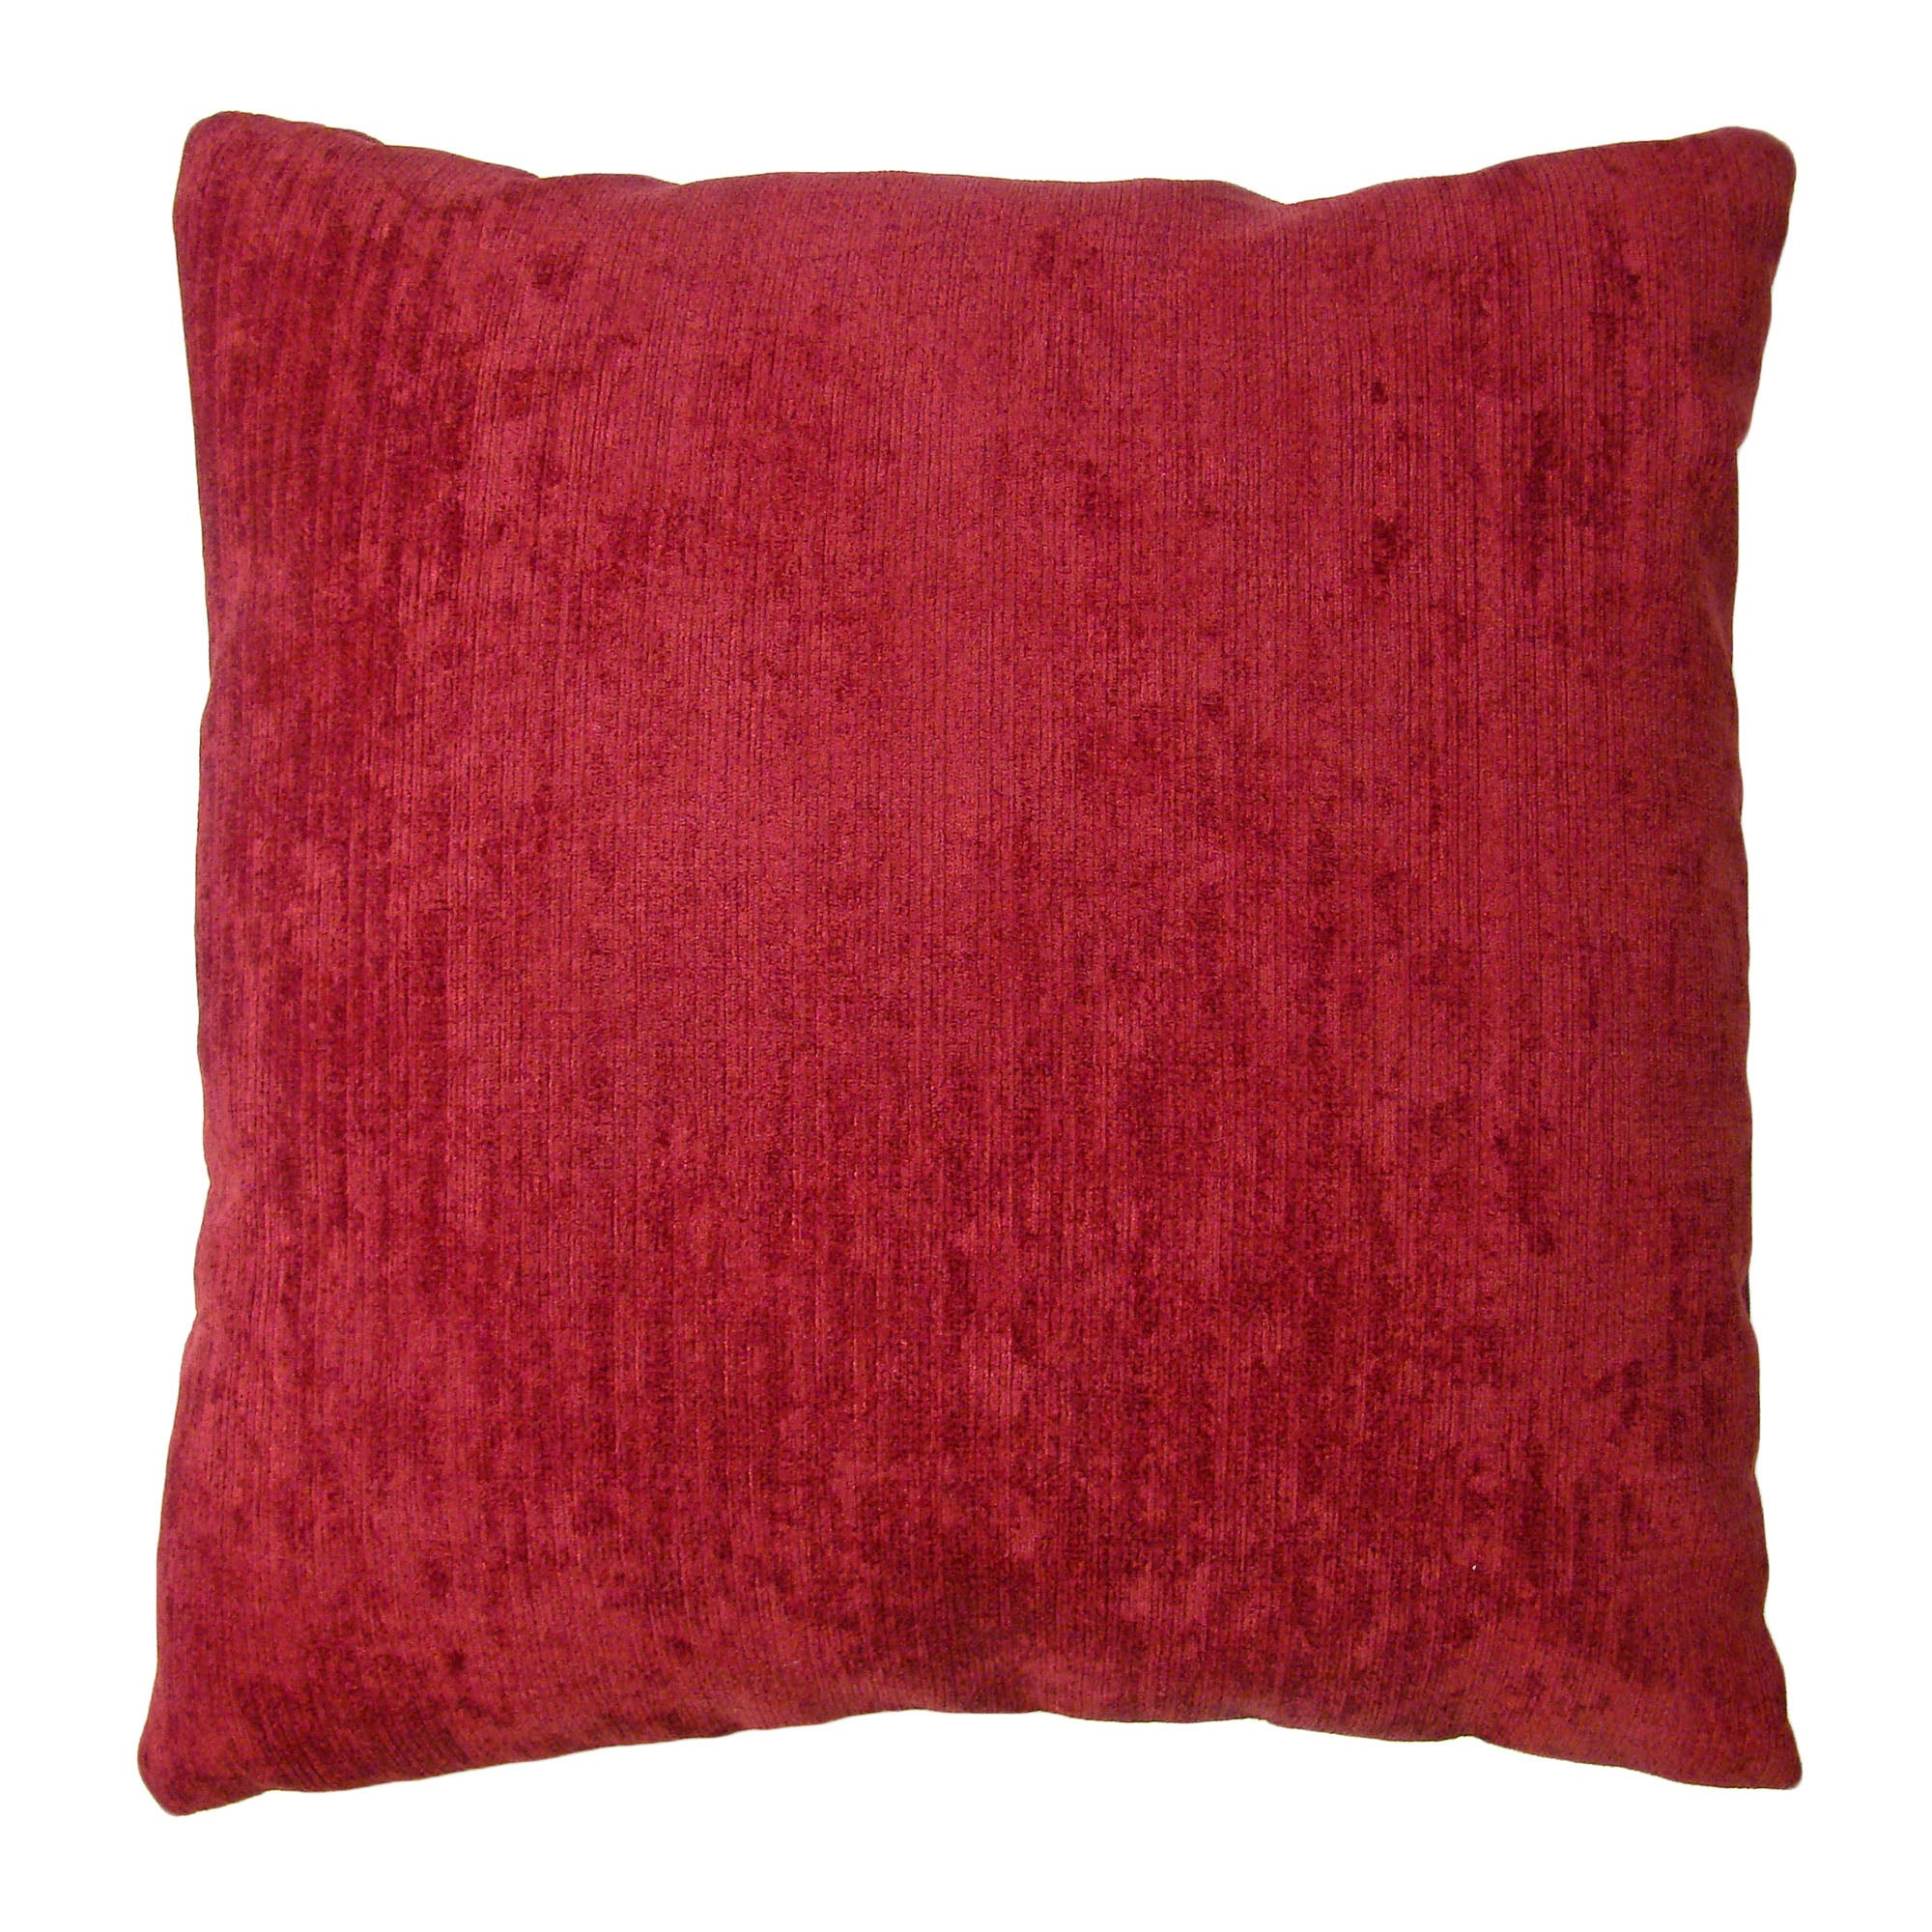 Topaz Cushion Cover Burgundy Red